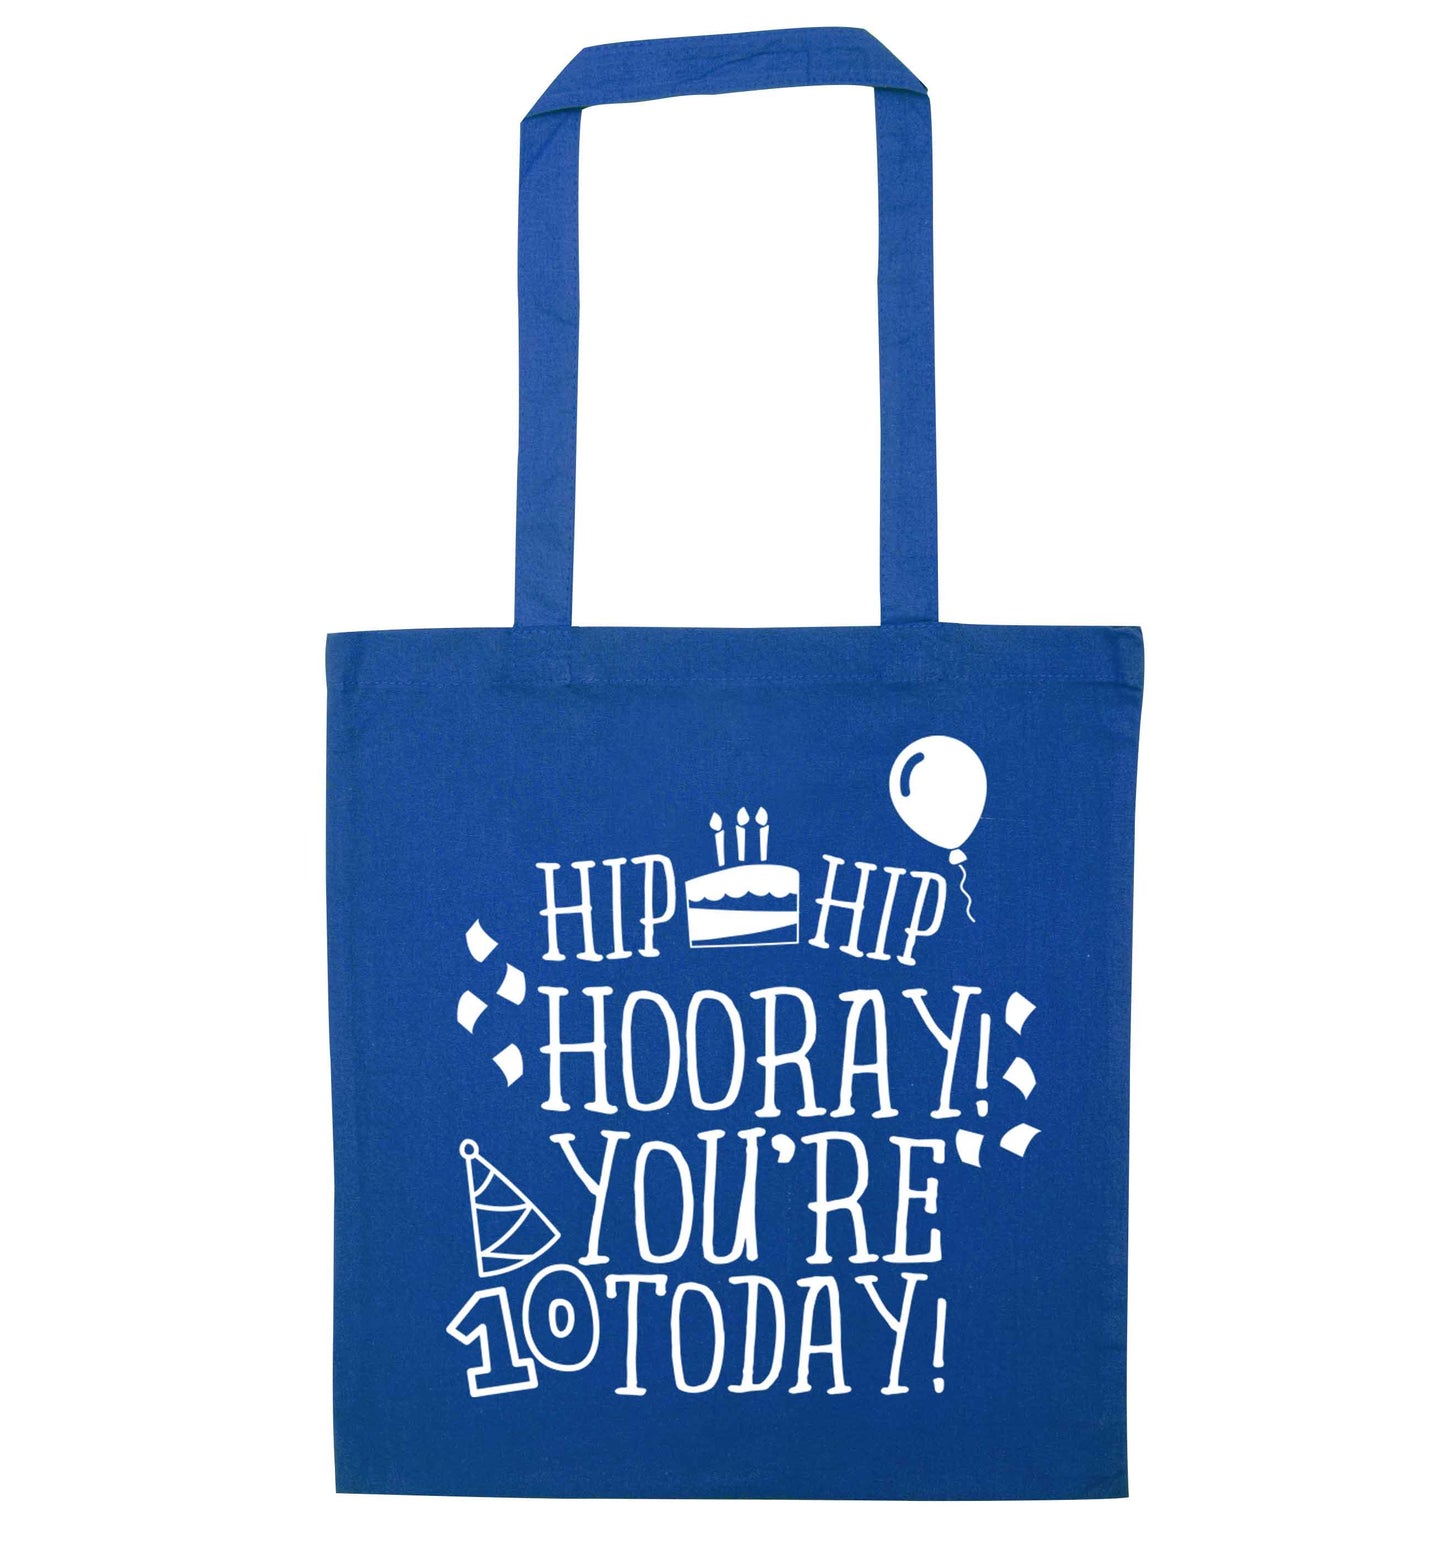 Hip hip hooray you're ten today! blue tote bag